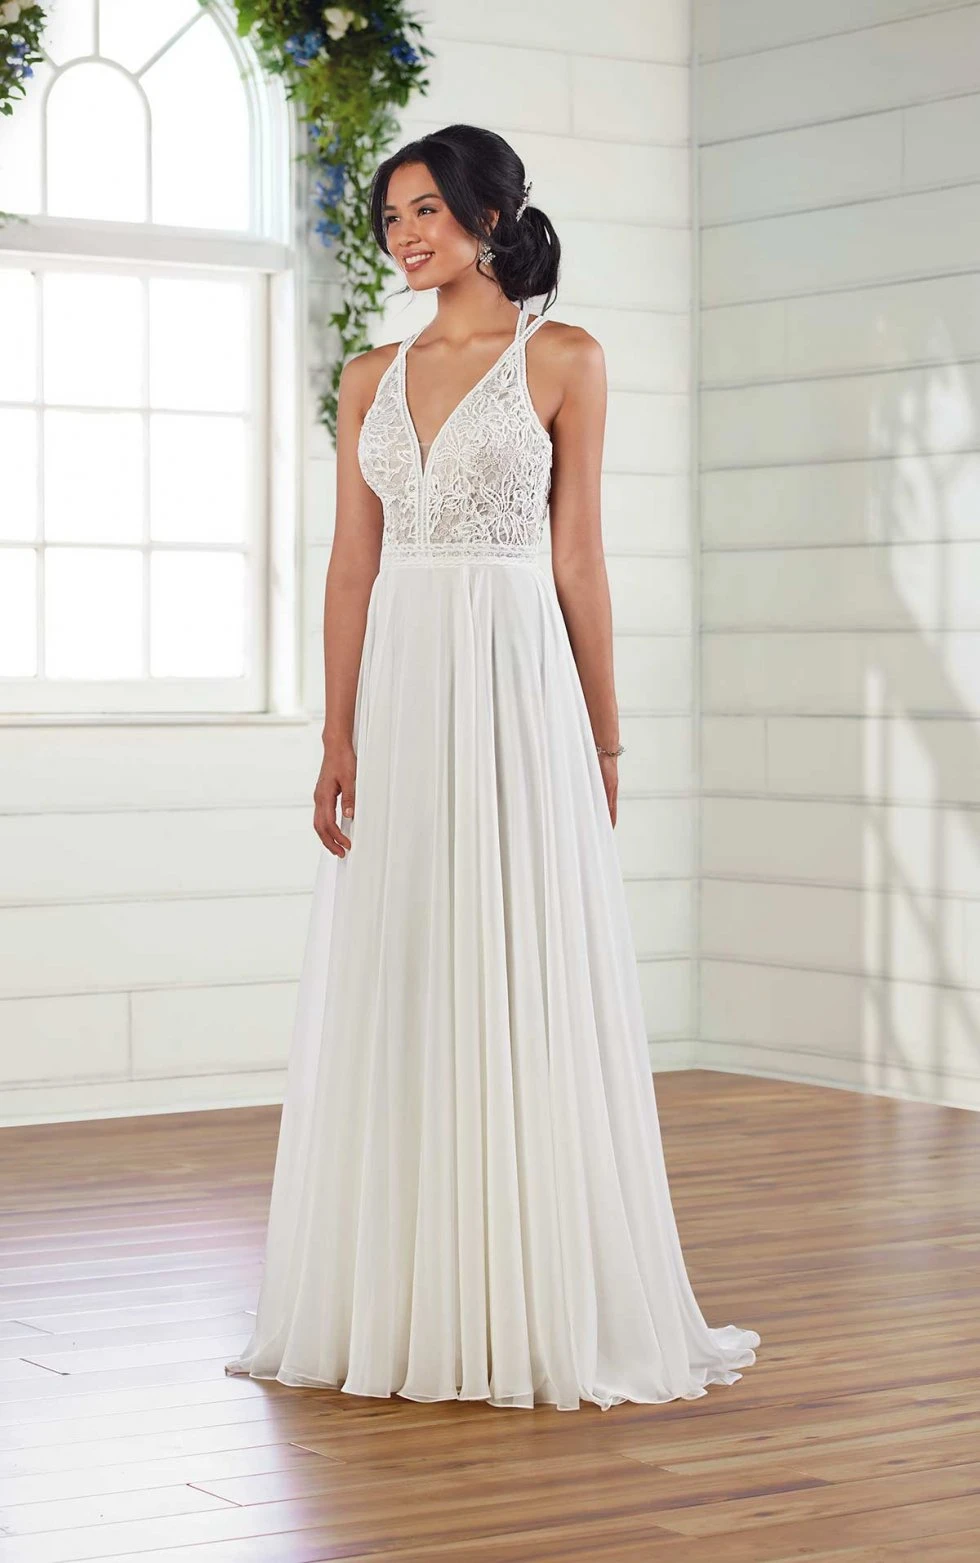 Grecian Style Wedding Gowns Shop, 56 ...